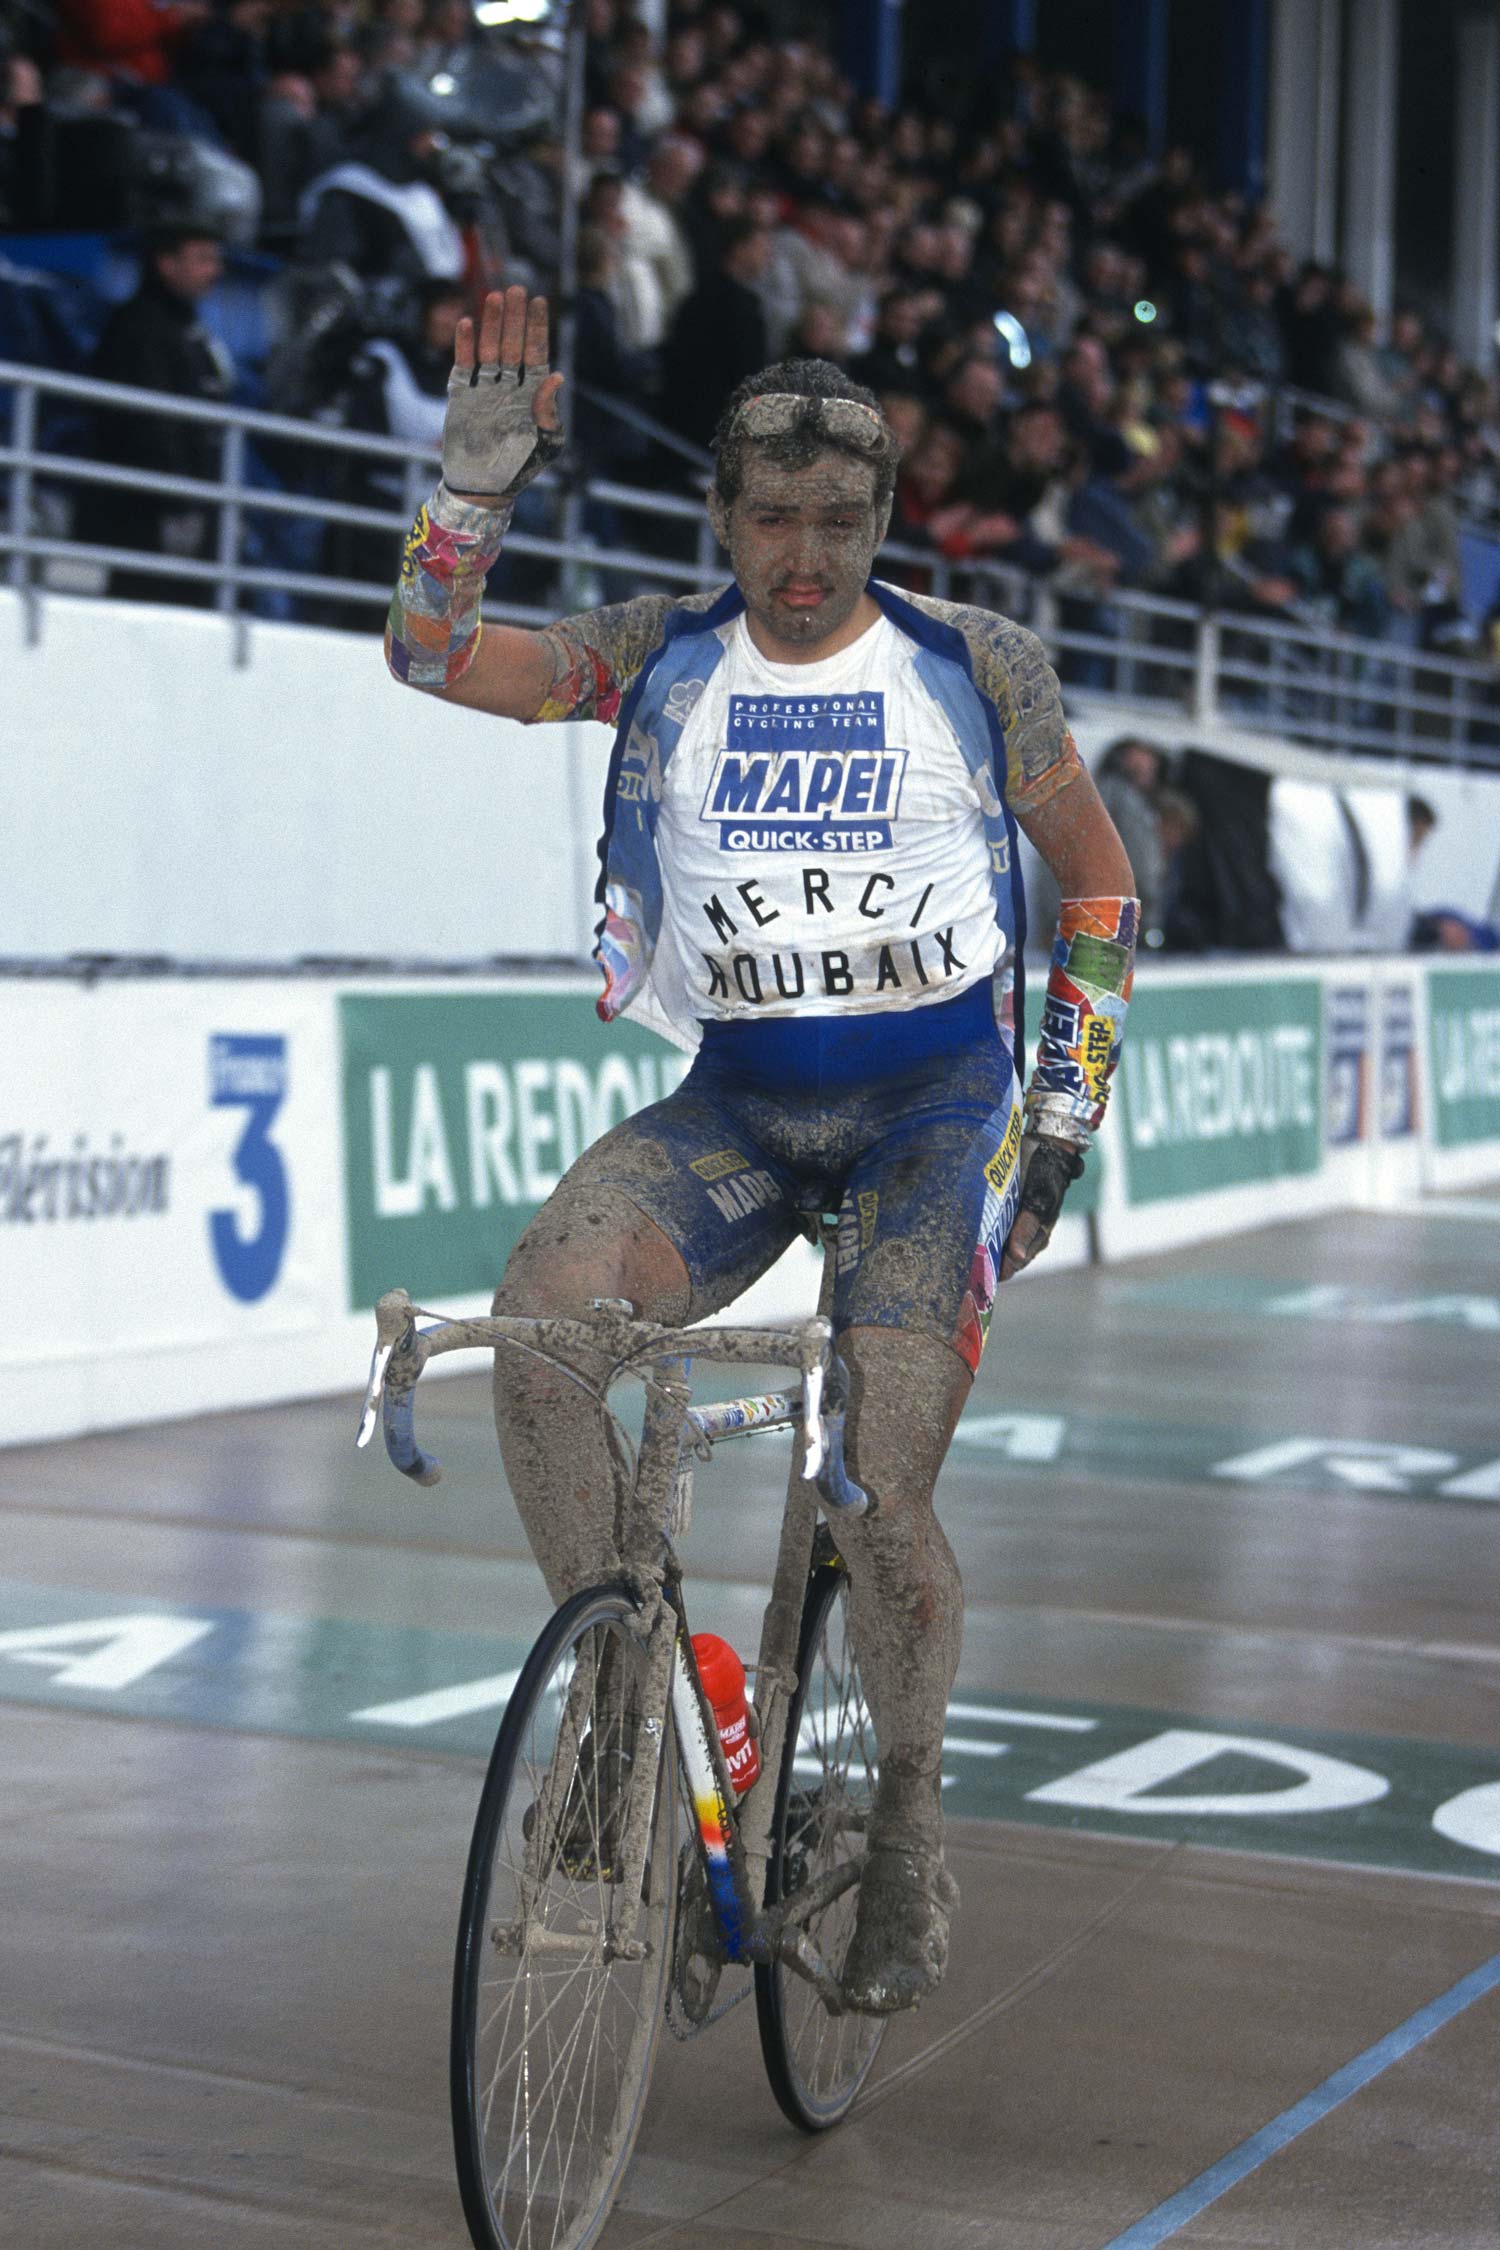 Paris-Roubaix gallery of the last 20 years